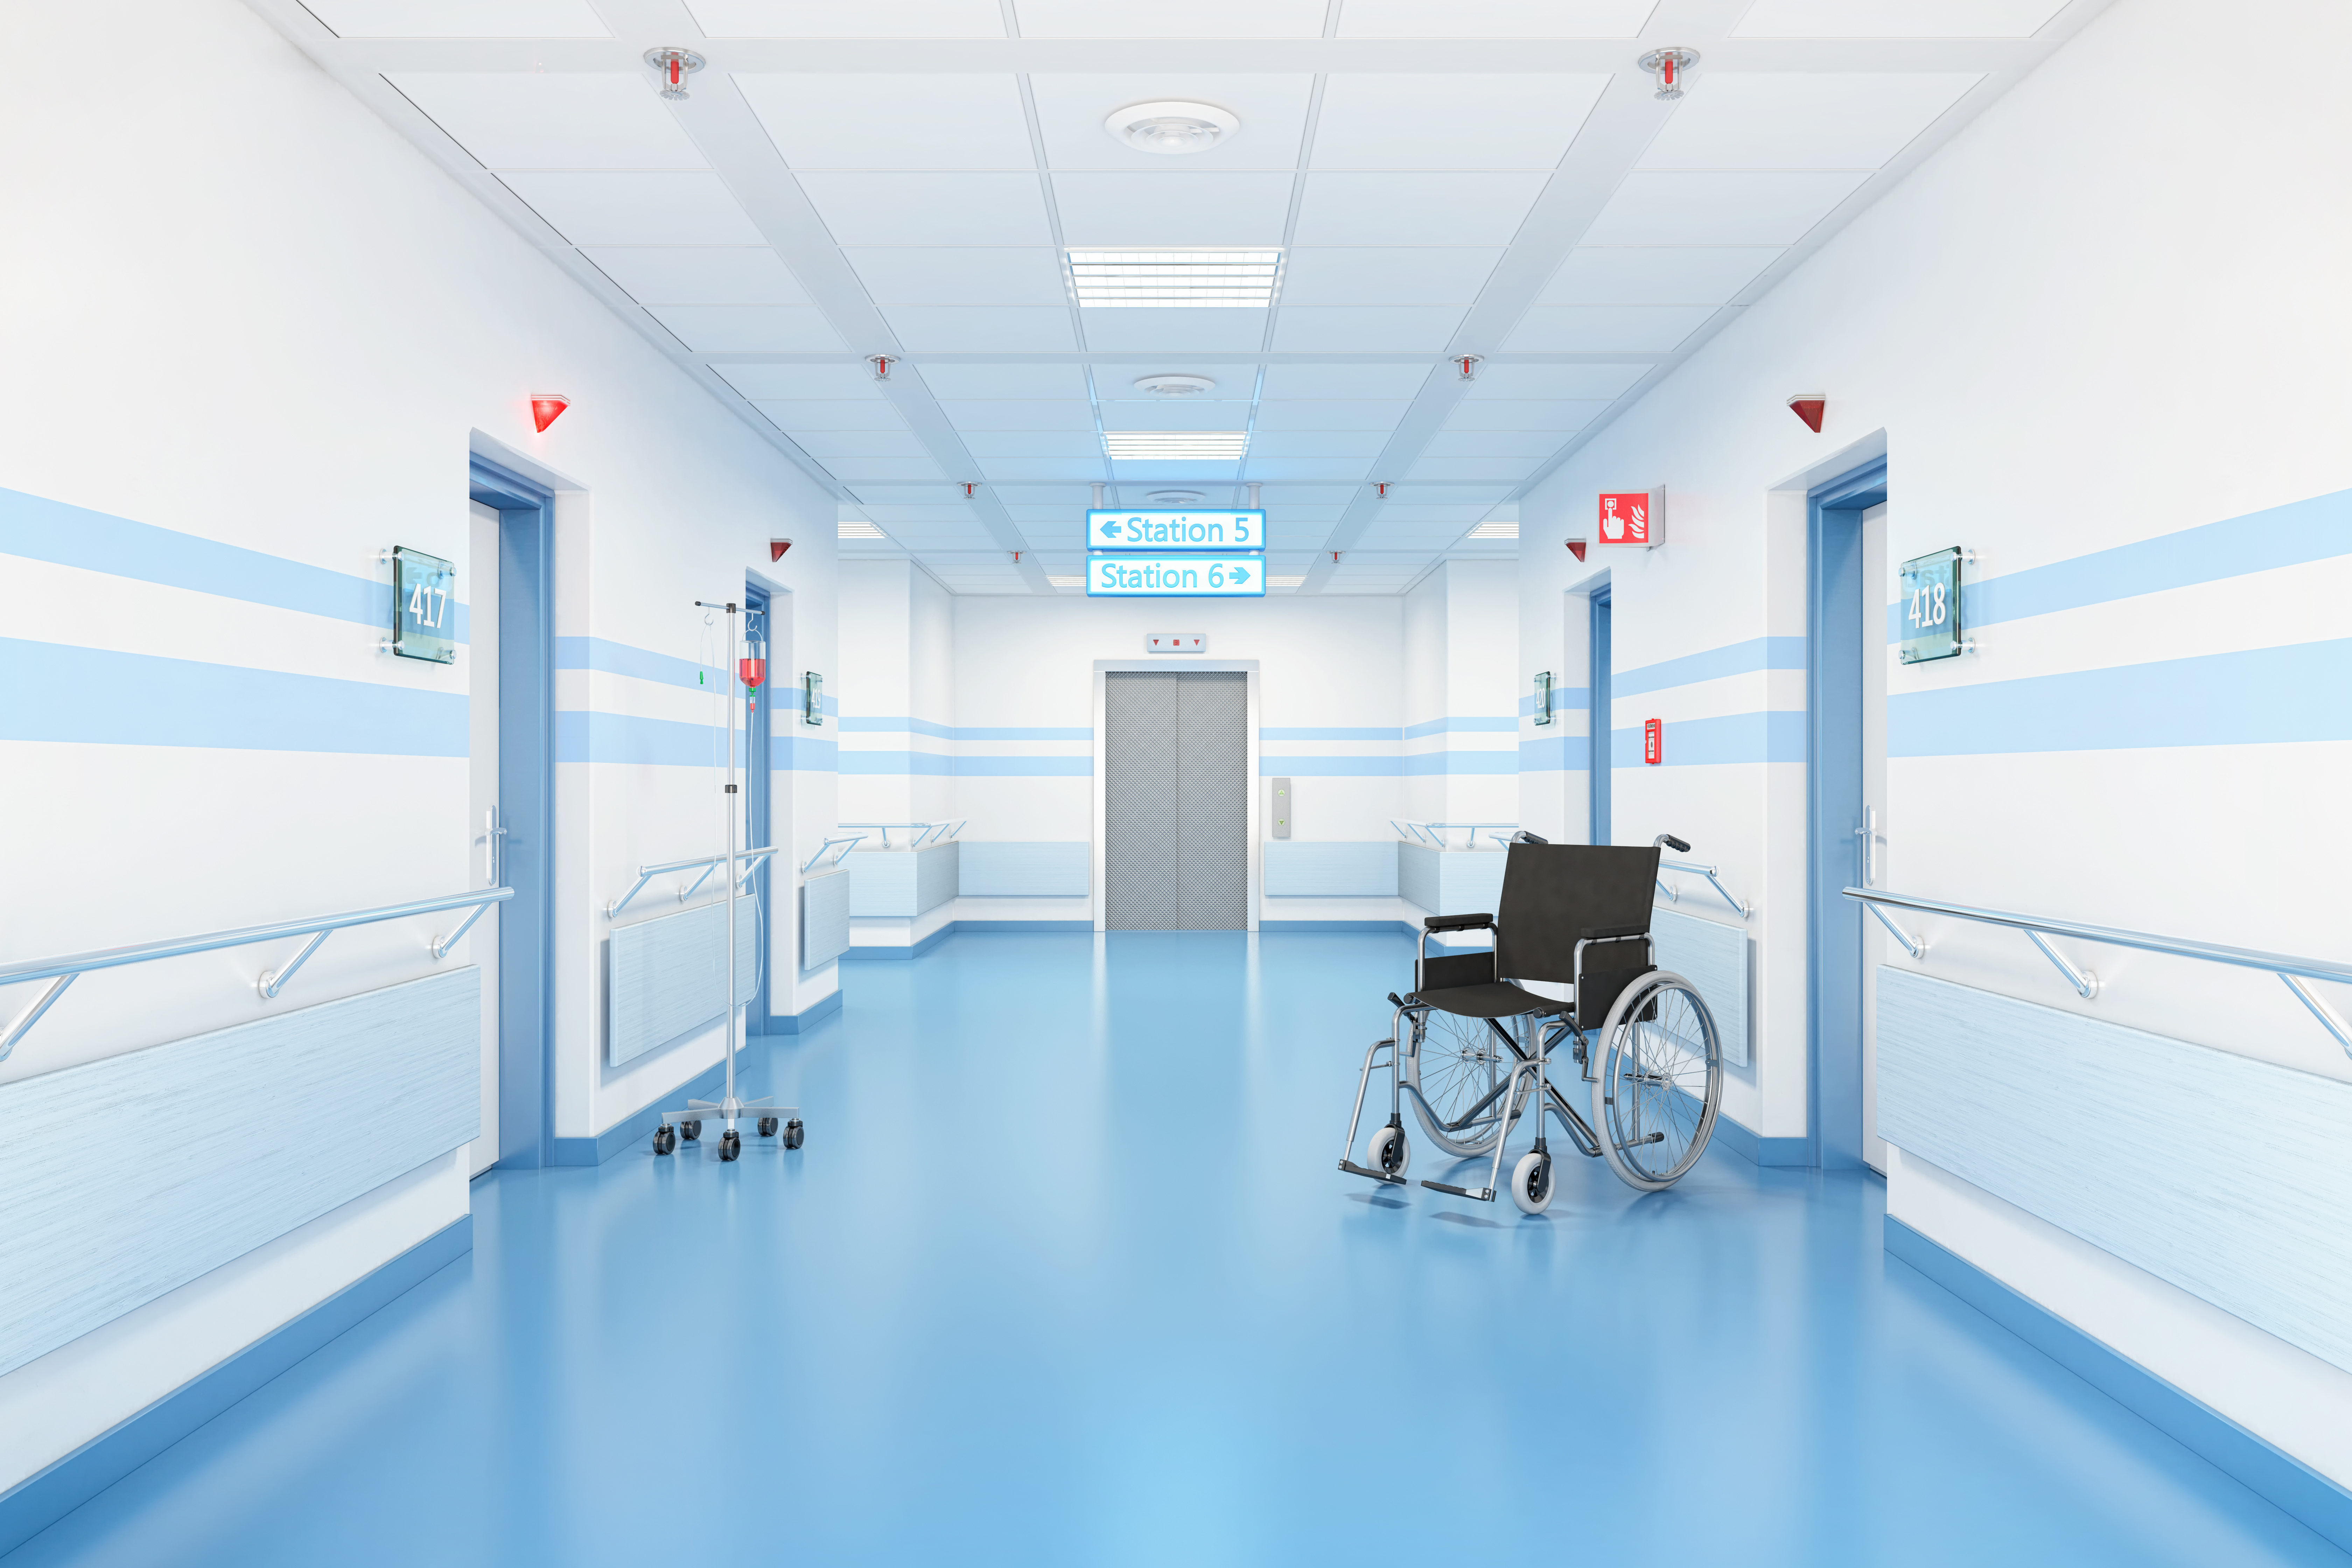 Injured Nurse Files Elevator Accident Lawsuit Against Hospital